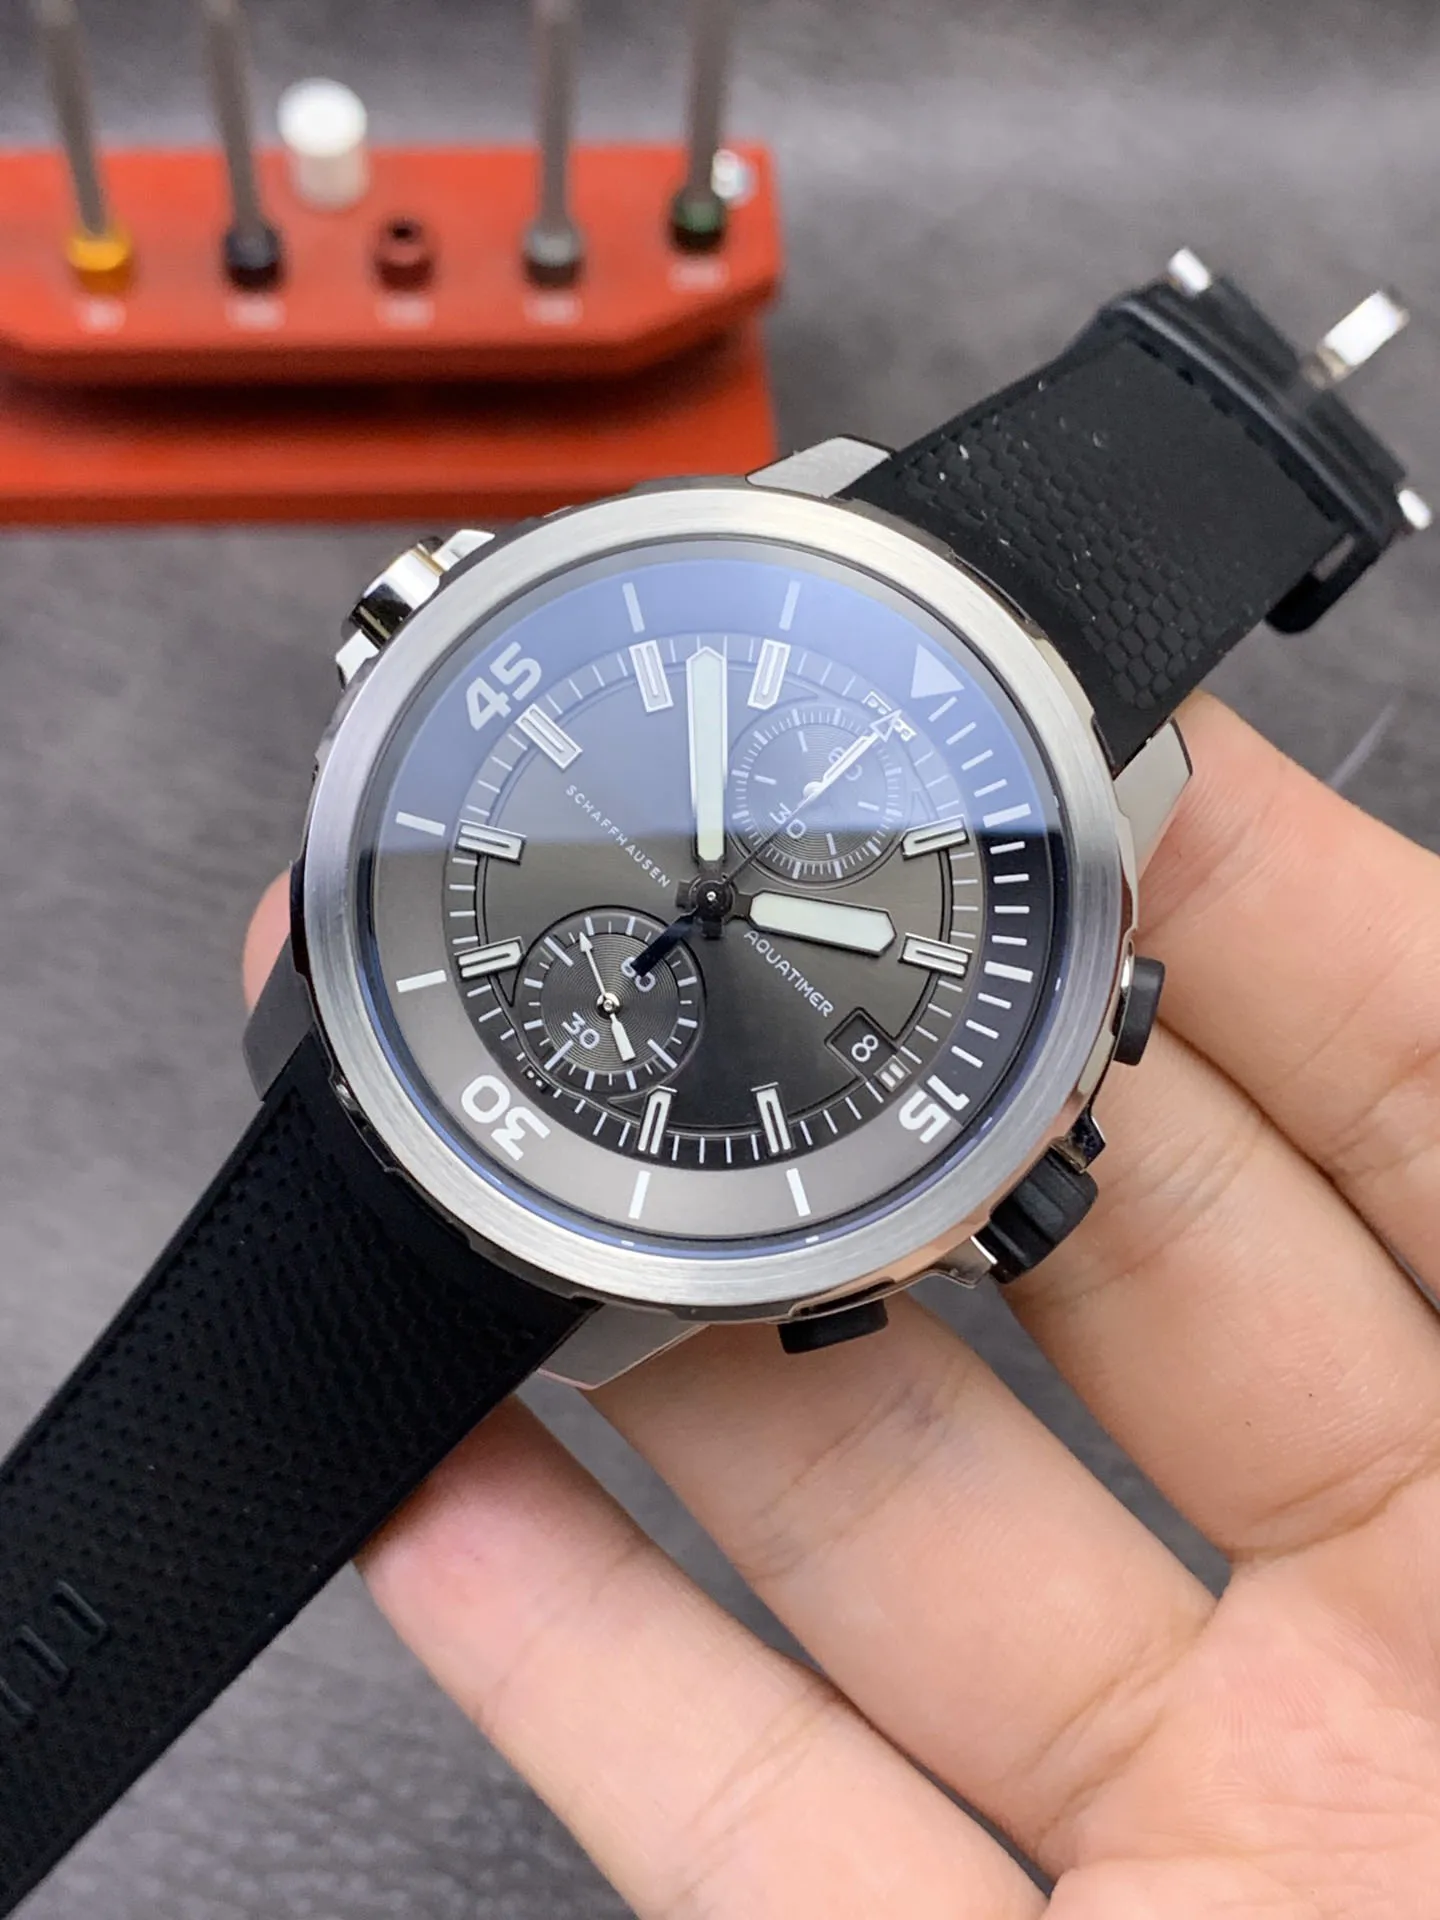 

Chronograph function Aquatimer "Shark" special edition internal and external rotating bezel 44MM gray dial watches